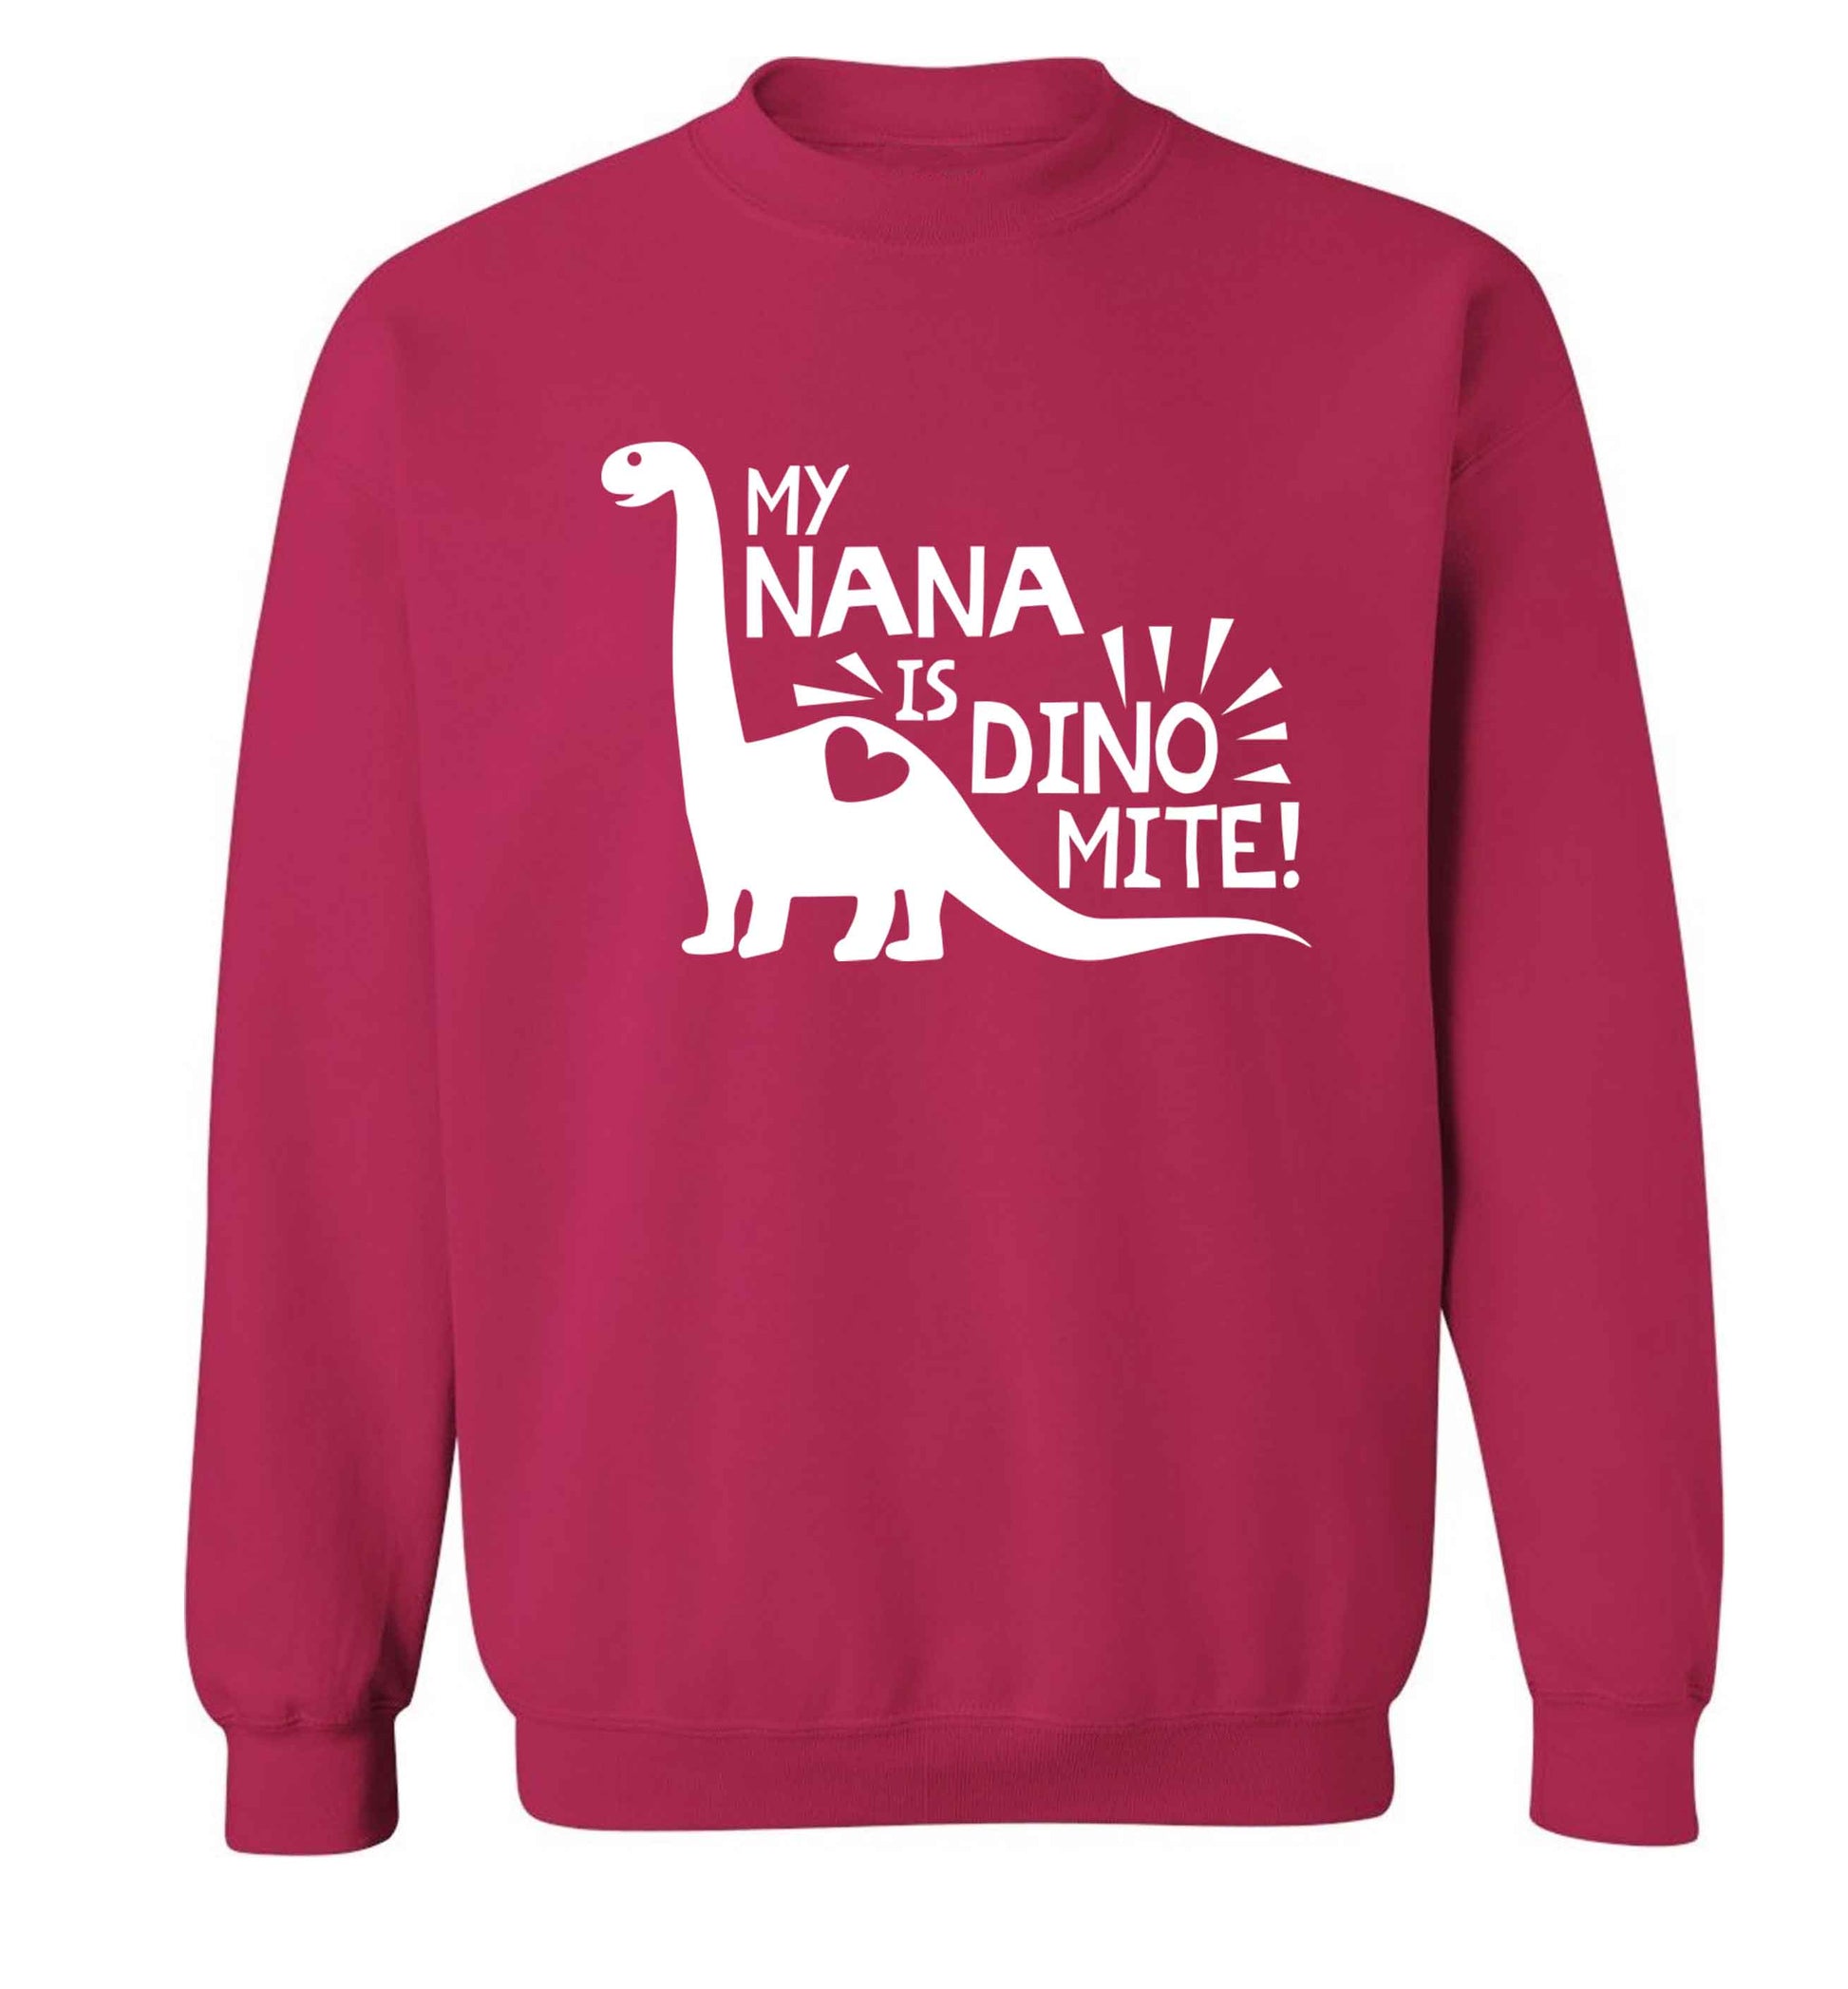 My nana is dinomite! Adult's unisex pink Sweater 2XL